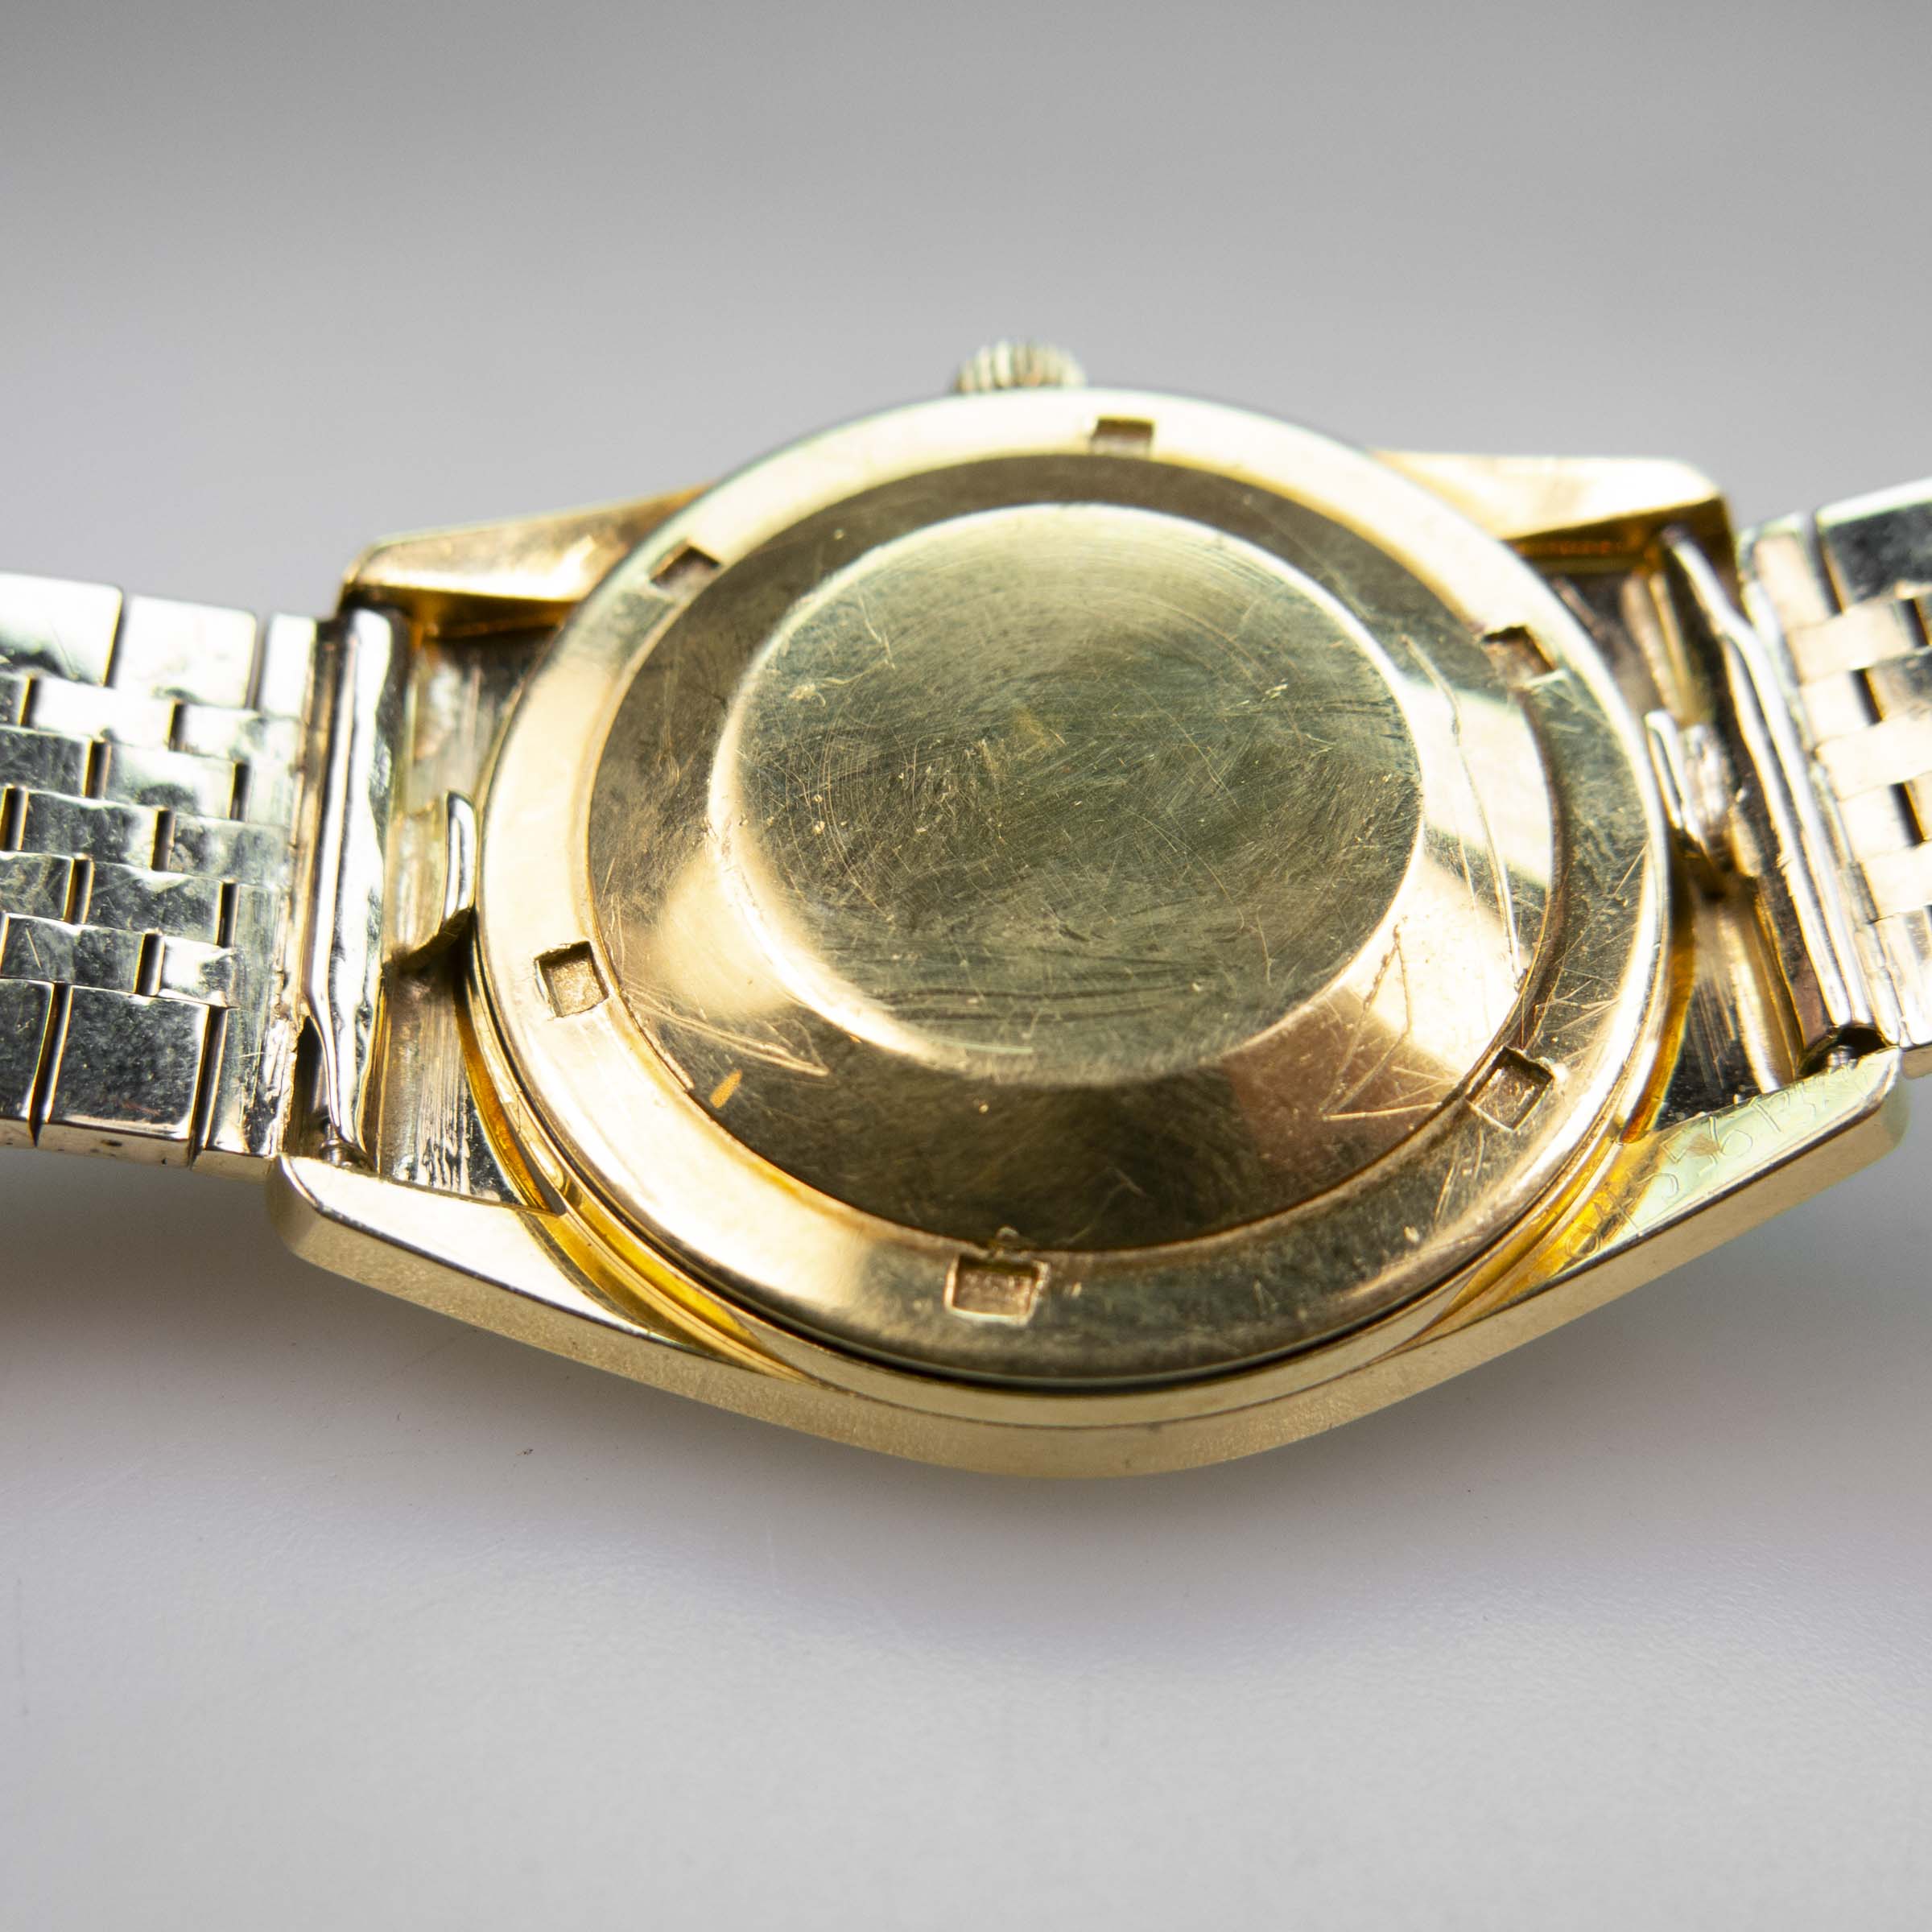 Girard-Perregaux Gyromax Wristwatch, with date